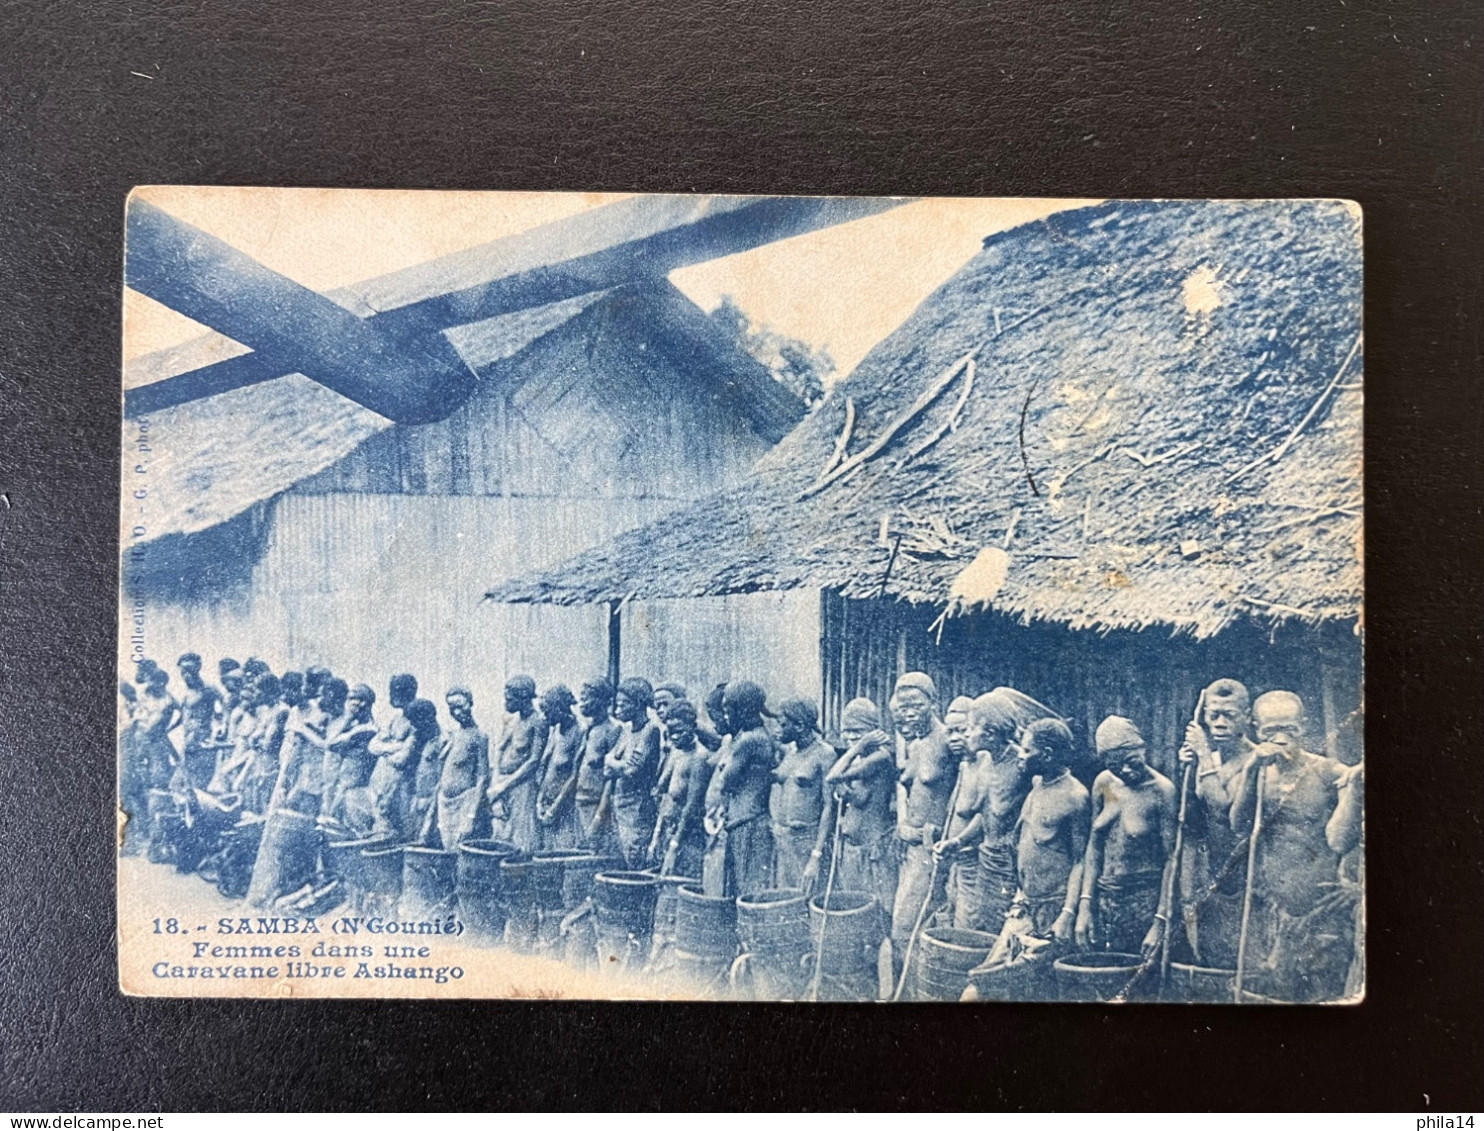 SP CPA GABON / SAMBA (N'GOUINE) FEMMES DANS UNE CARAVANE LIBRE ASHANGO / 1911 / PLI - Lettres & Documents